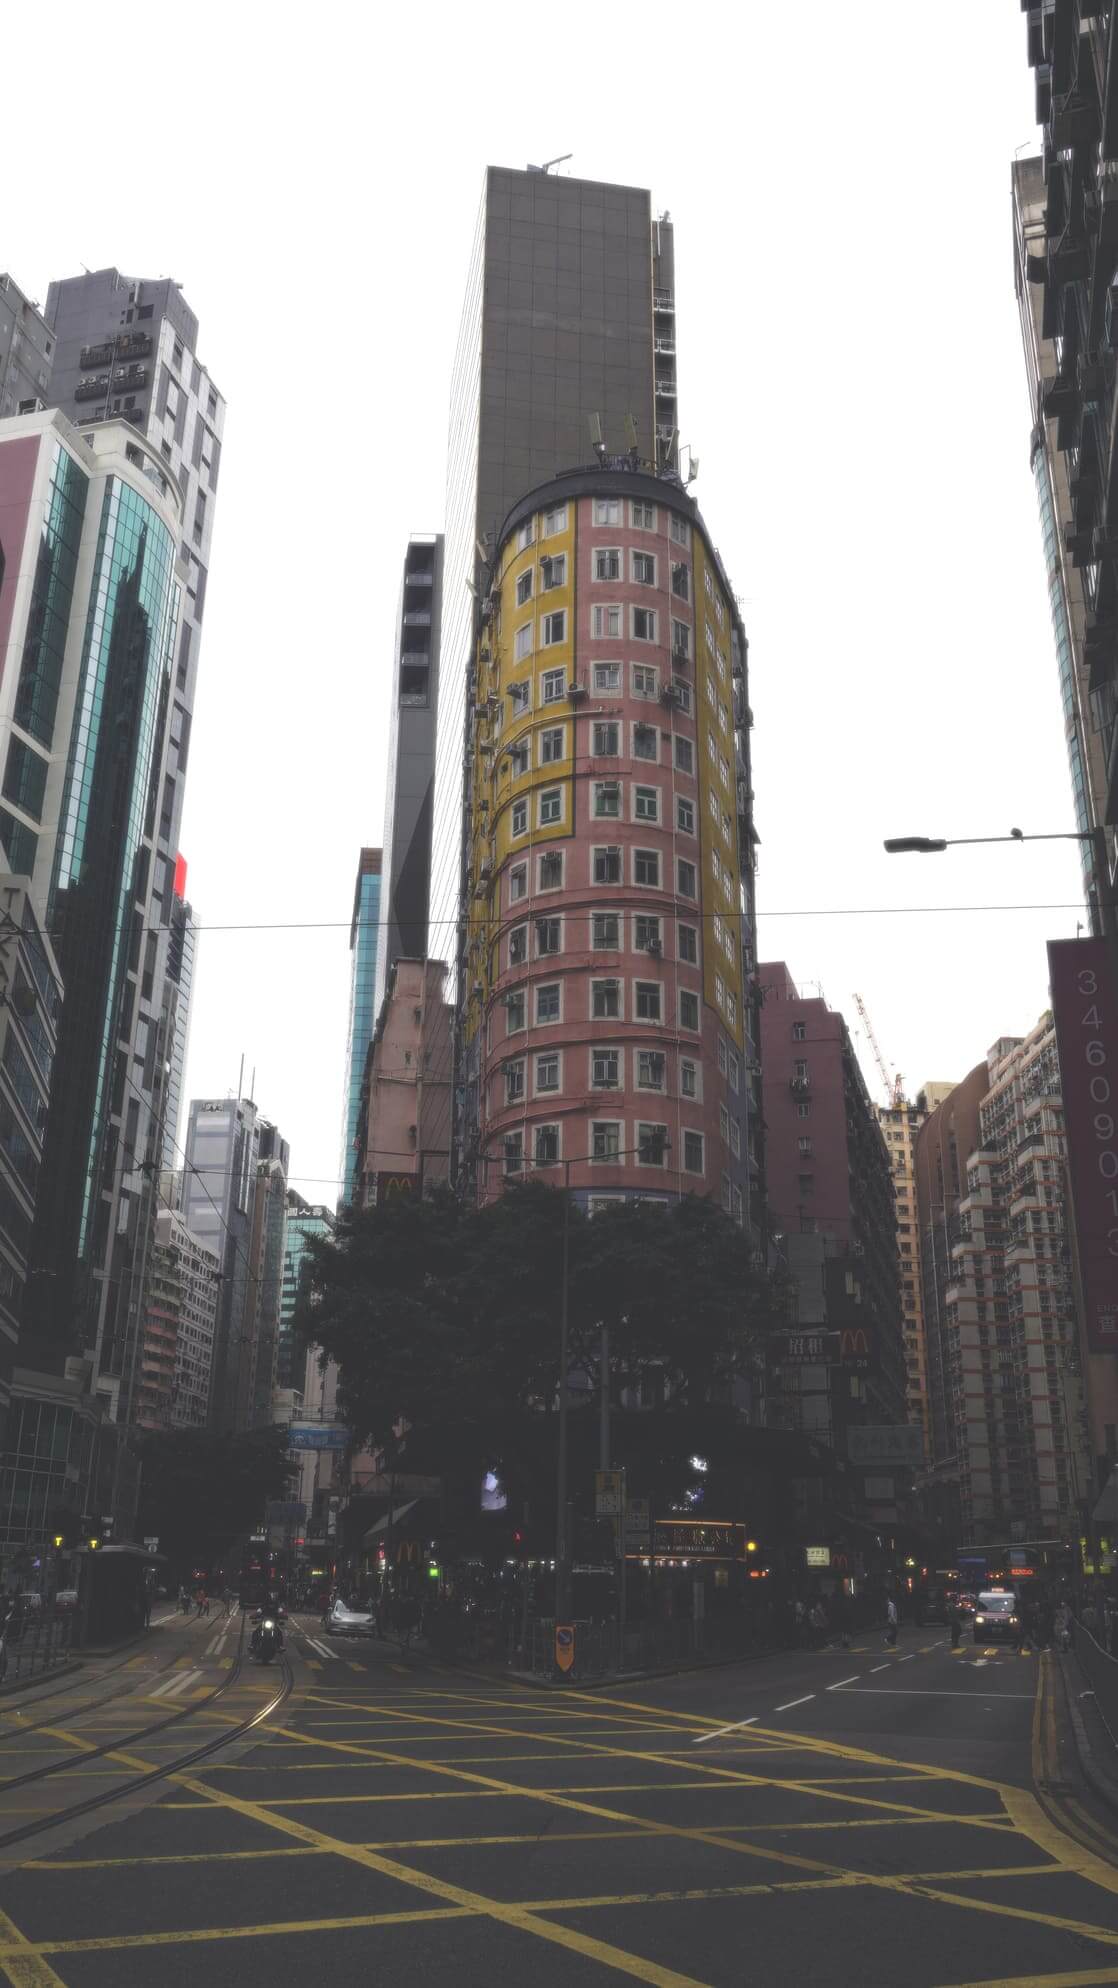 Hong Kong buildings by Ajay Jakhi